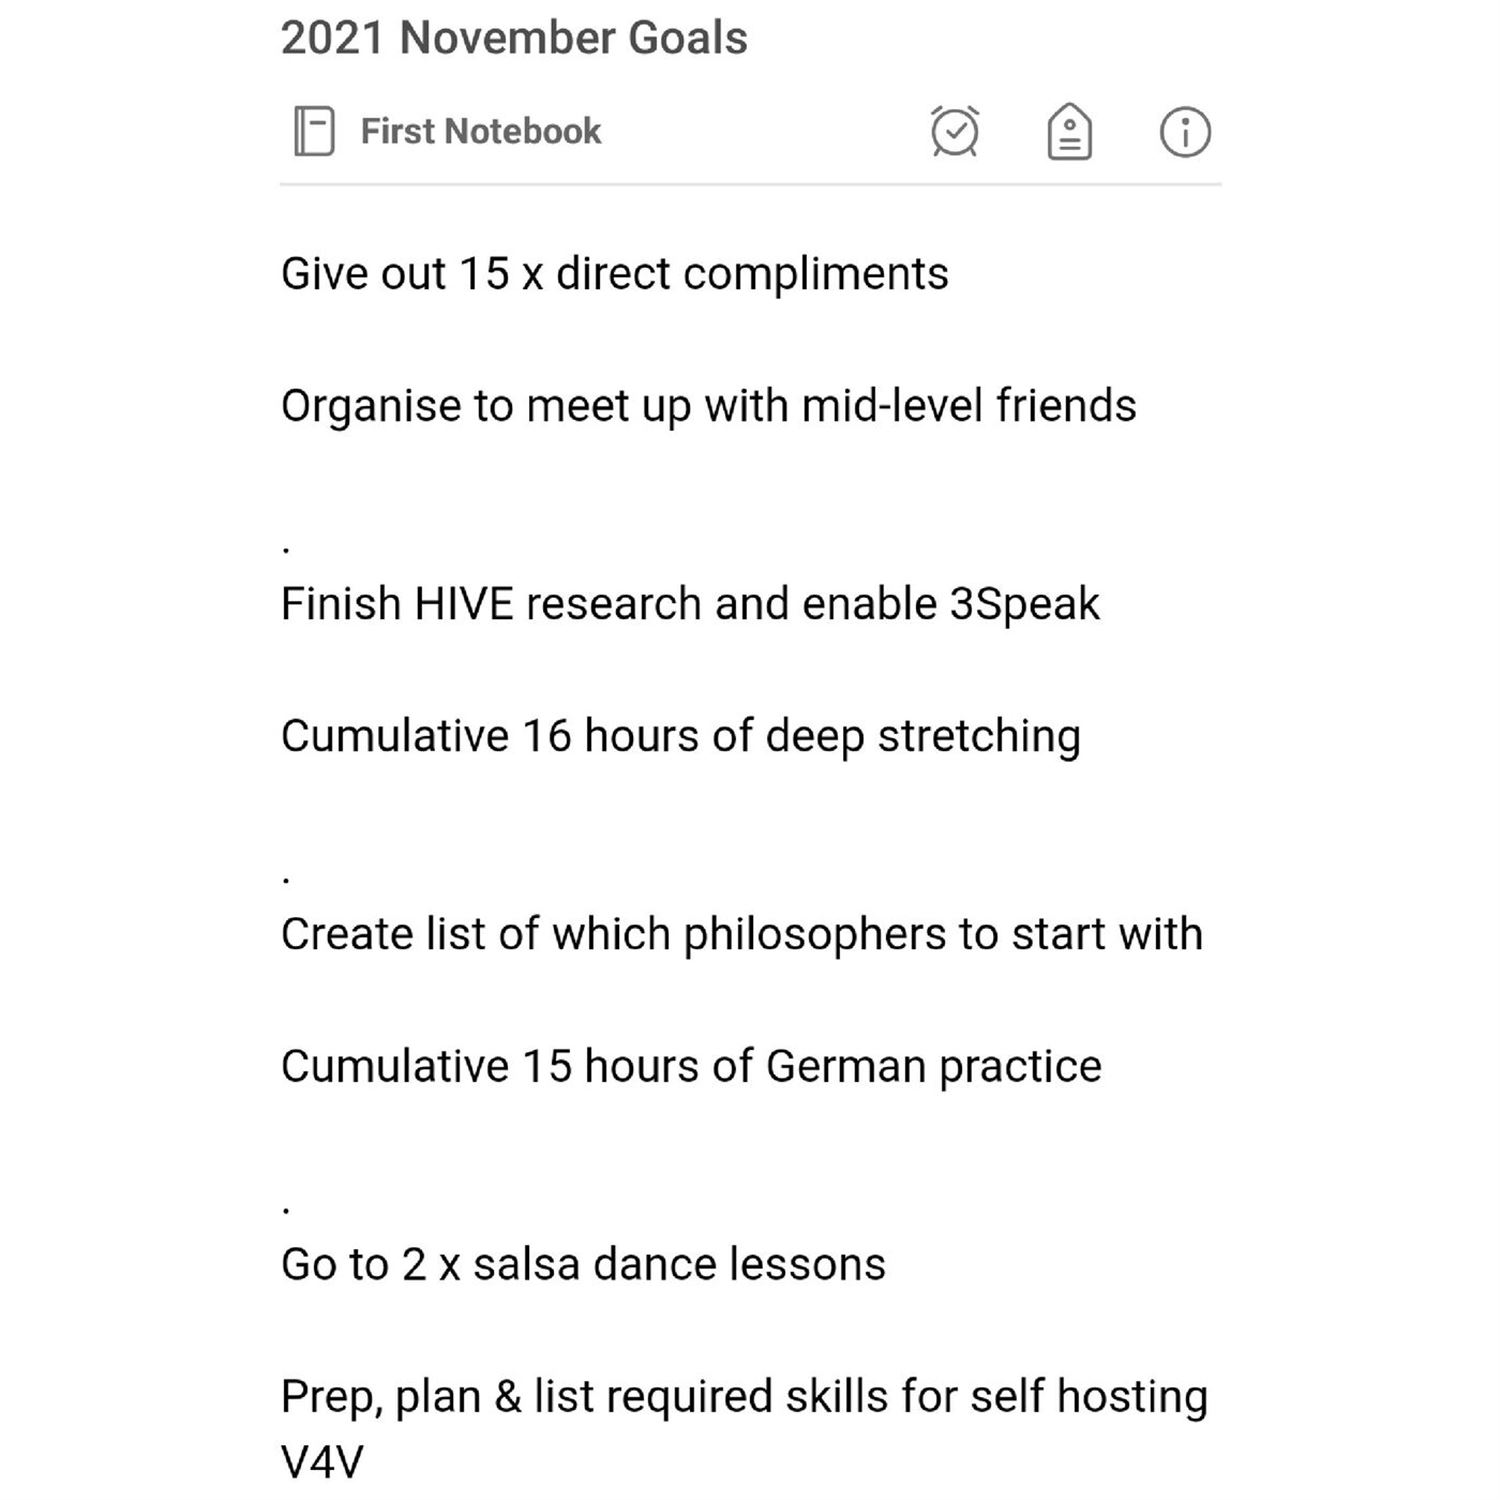 Kyrin's November goals